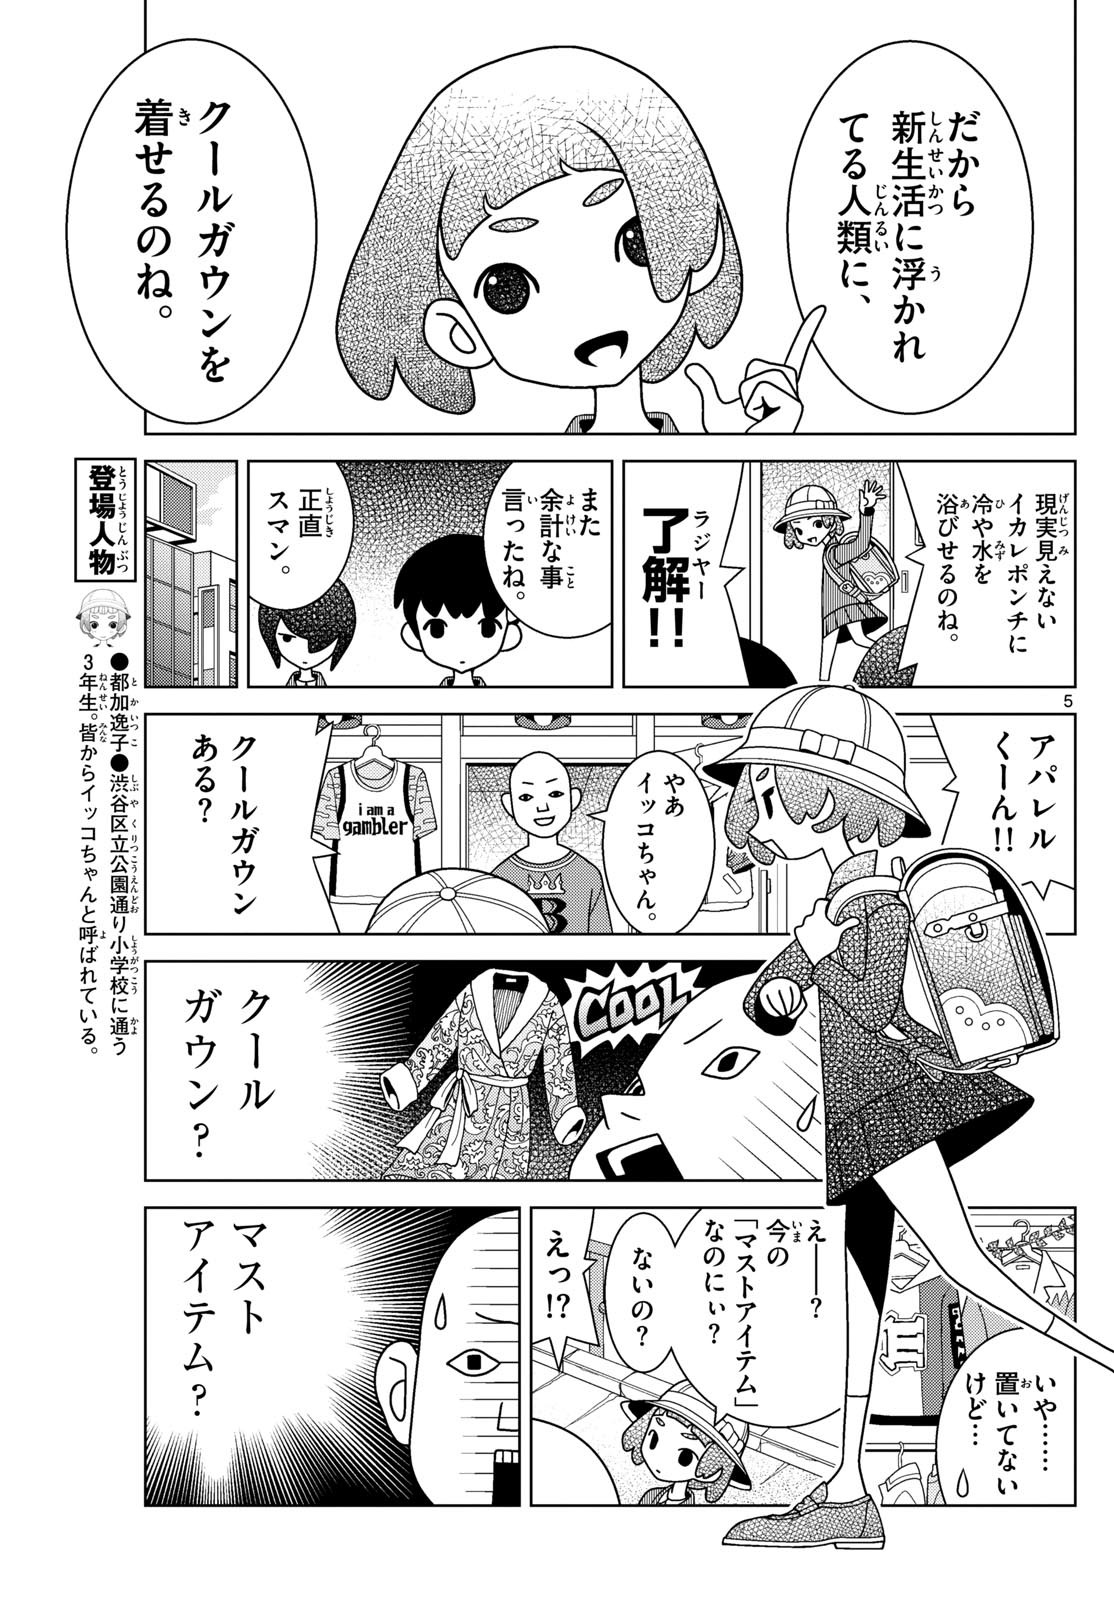 Shibuya Near Family - Chapter 093 - Page 5